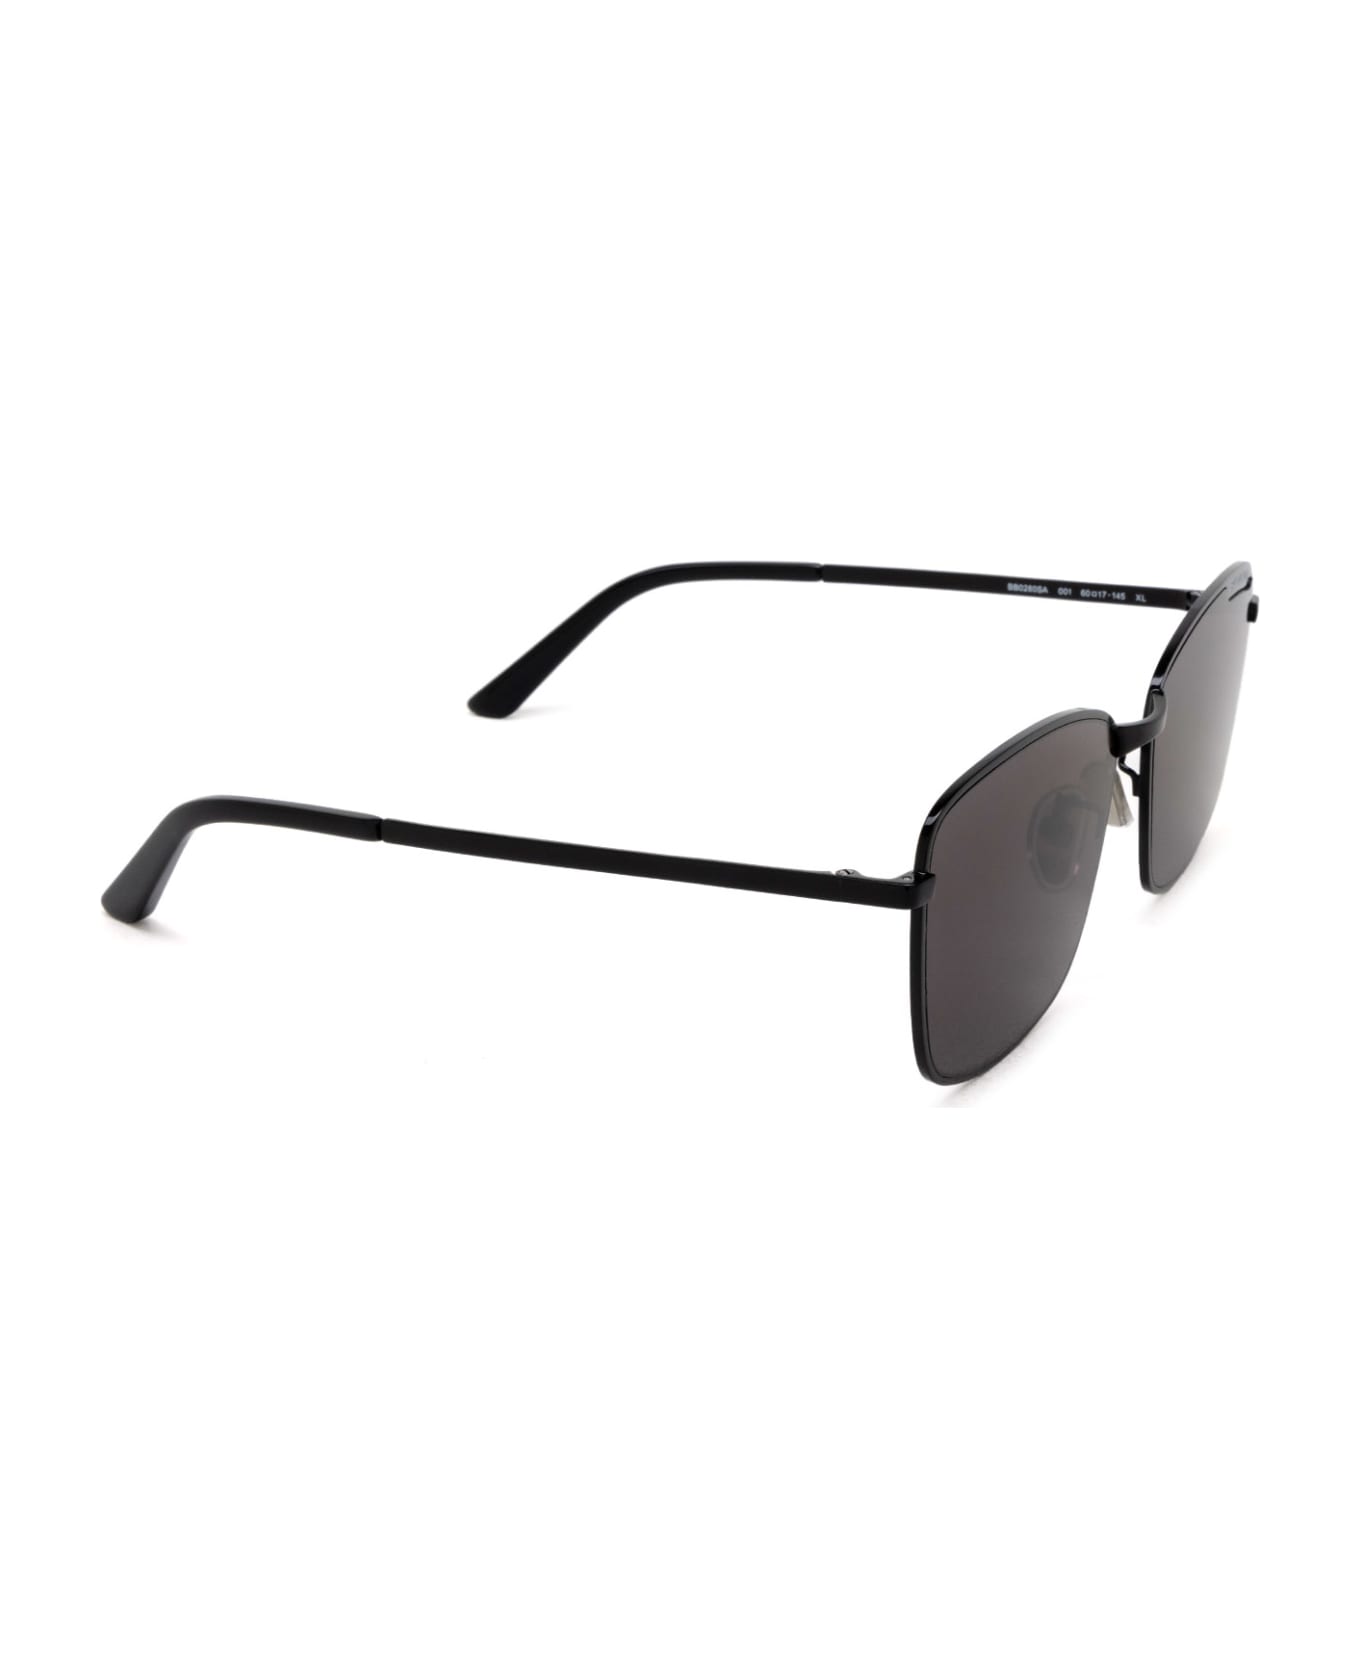 Balenciaga Eyewear Bb0280sa Black Sunglasses - Black